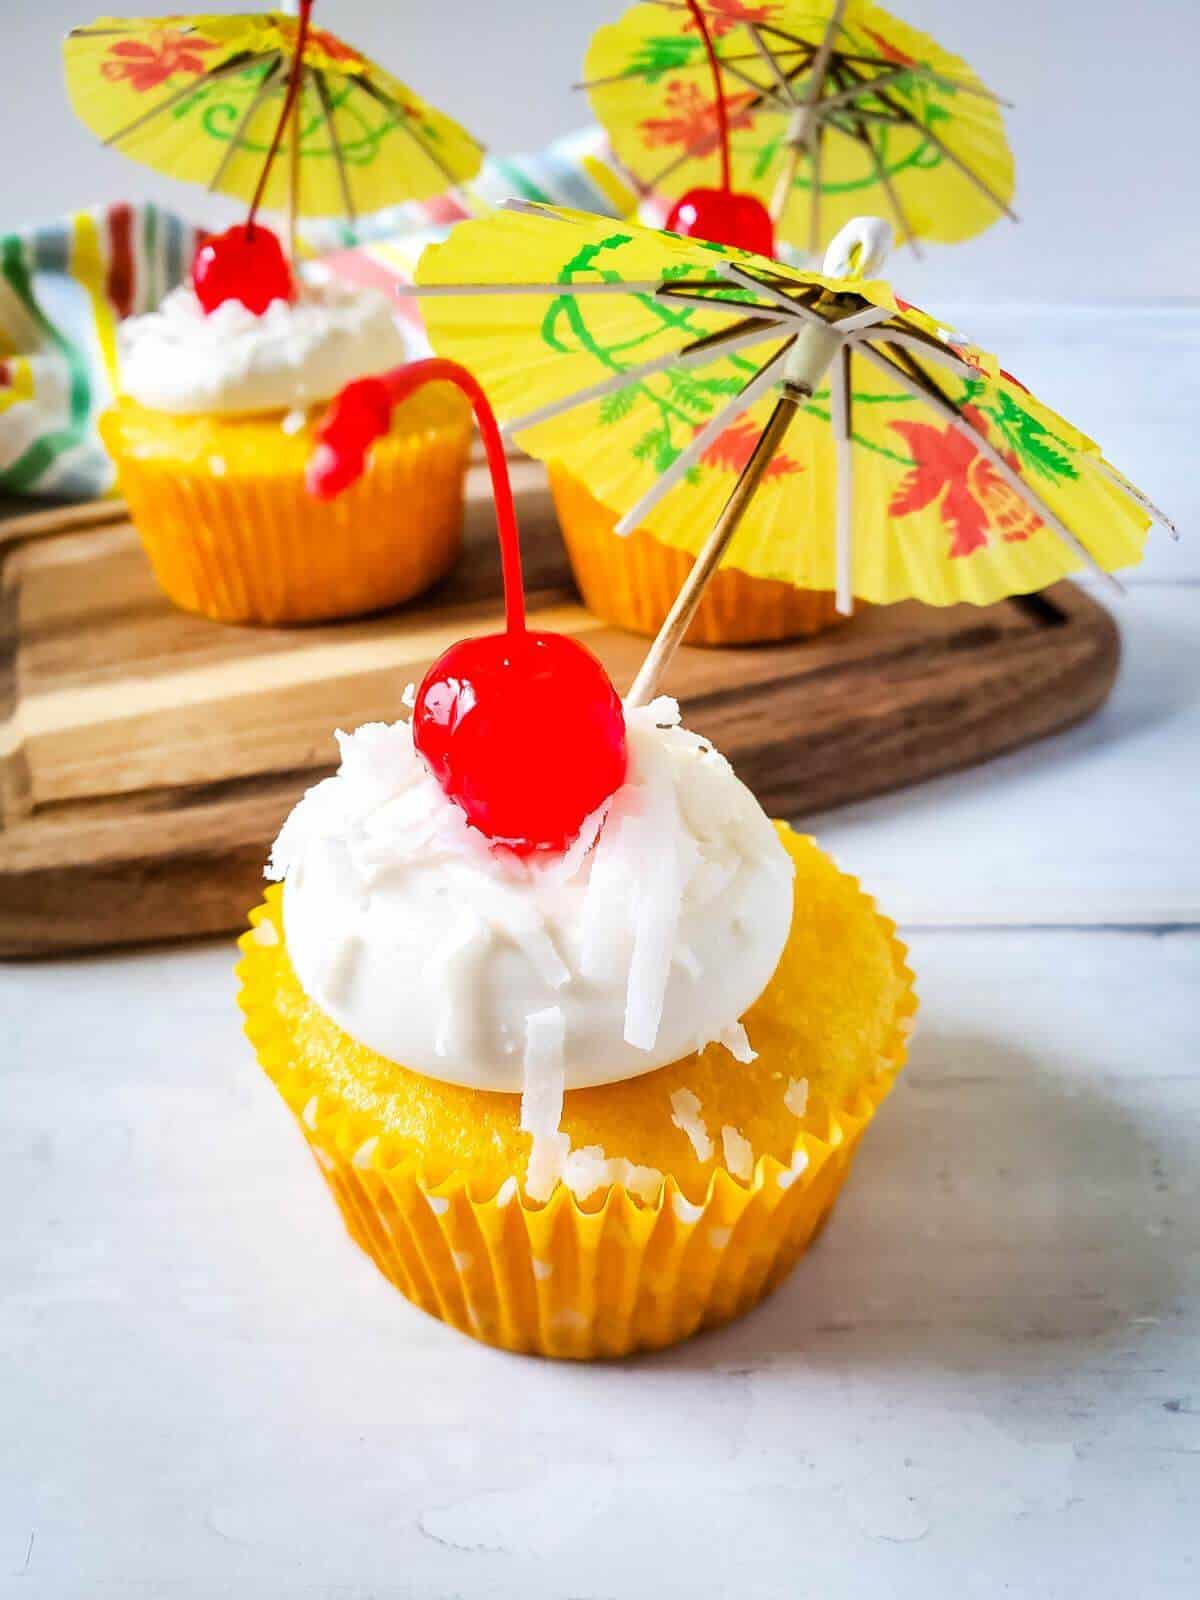 Pina colada cupcakes with tropical umbrellas on them.